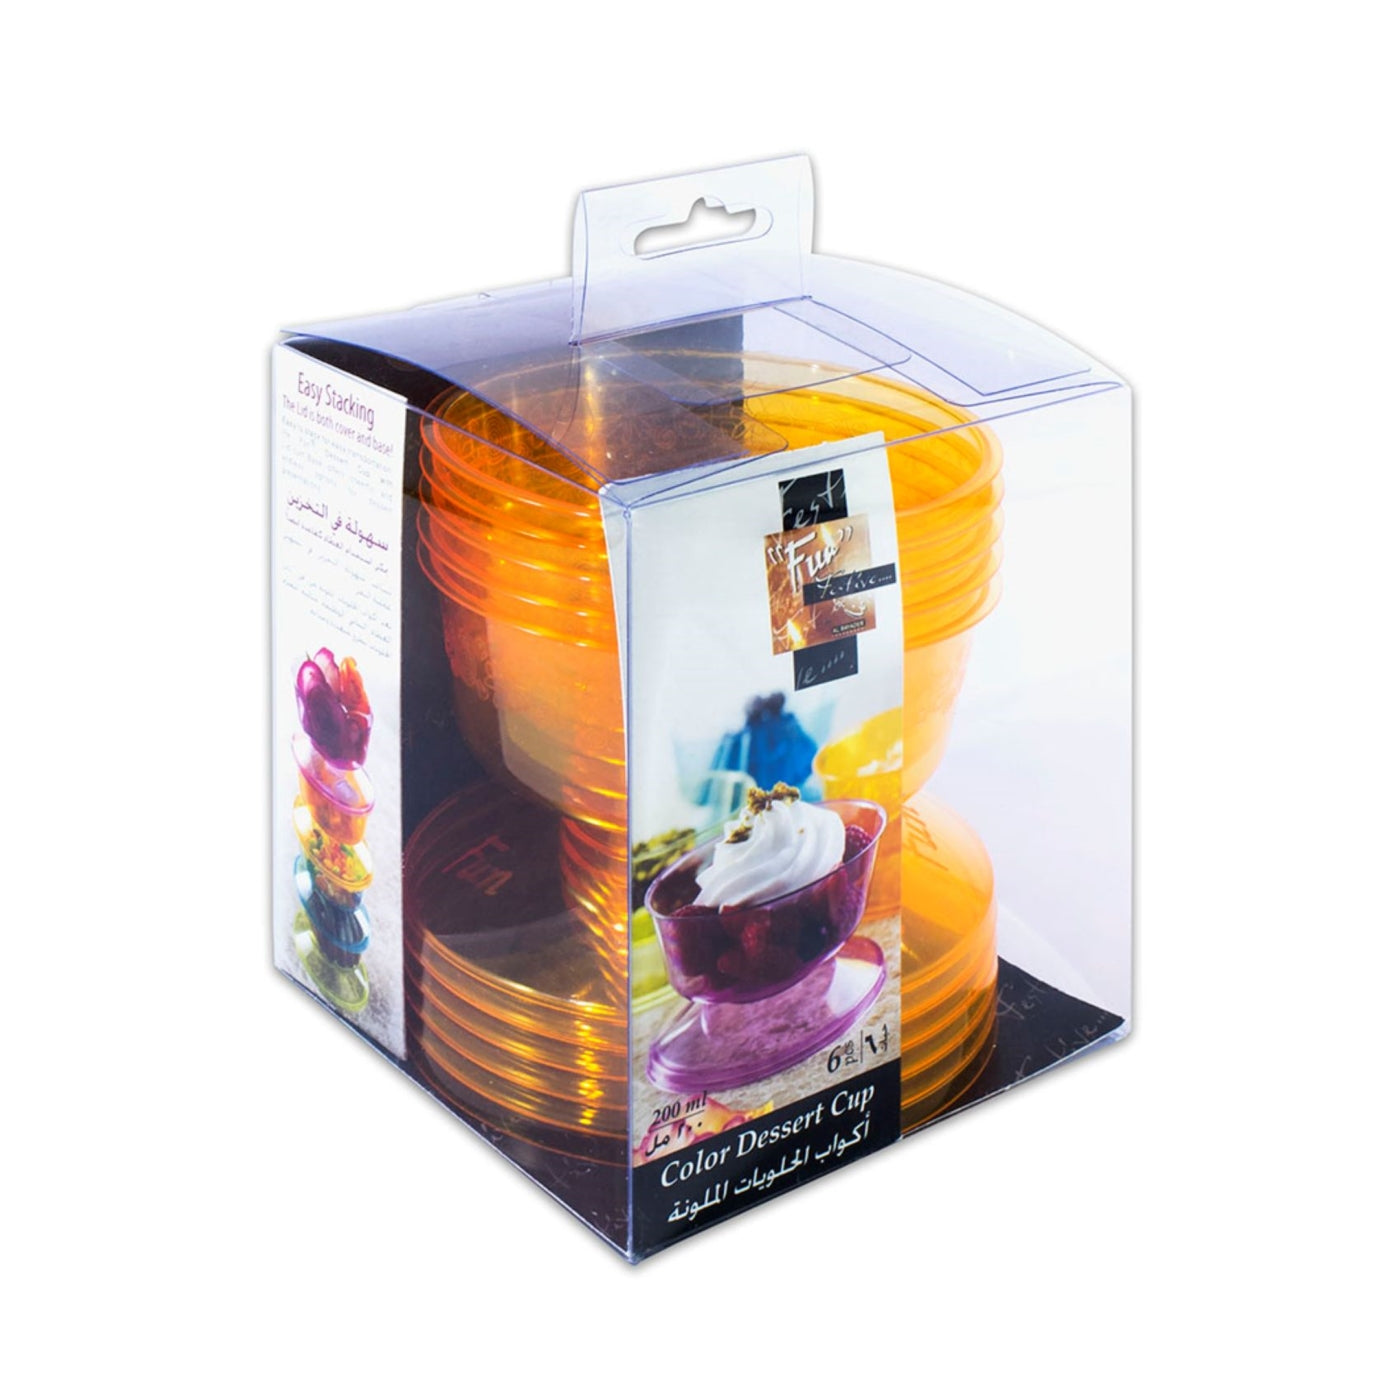 Fun® Color Plastic Disposable Dessert Cup with lids - Citrus, Pack of 6